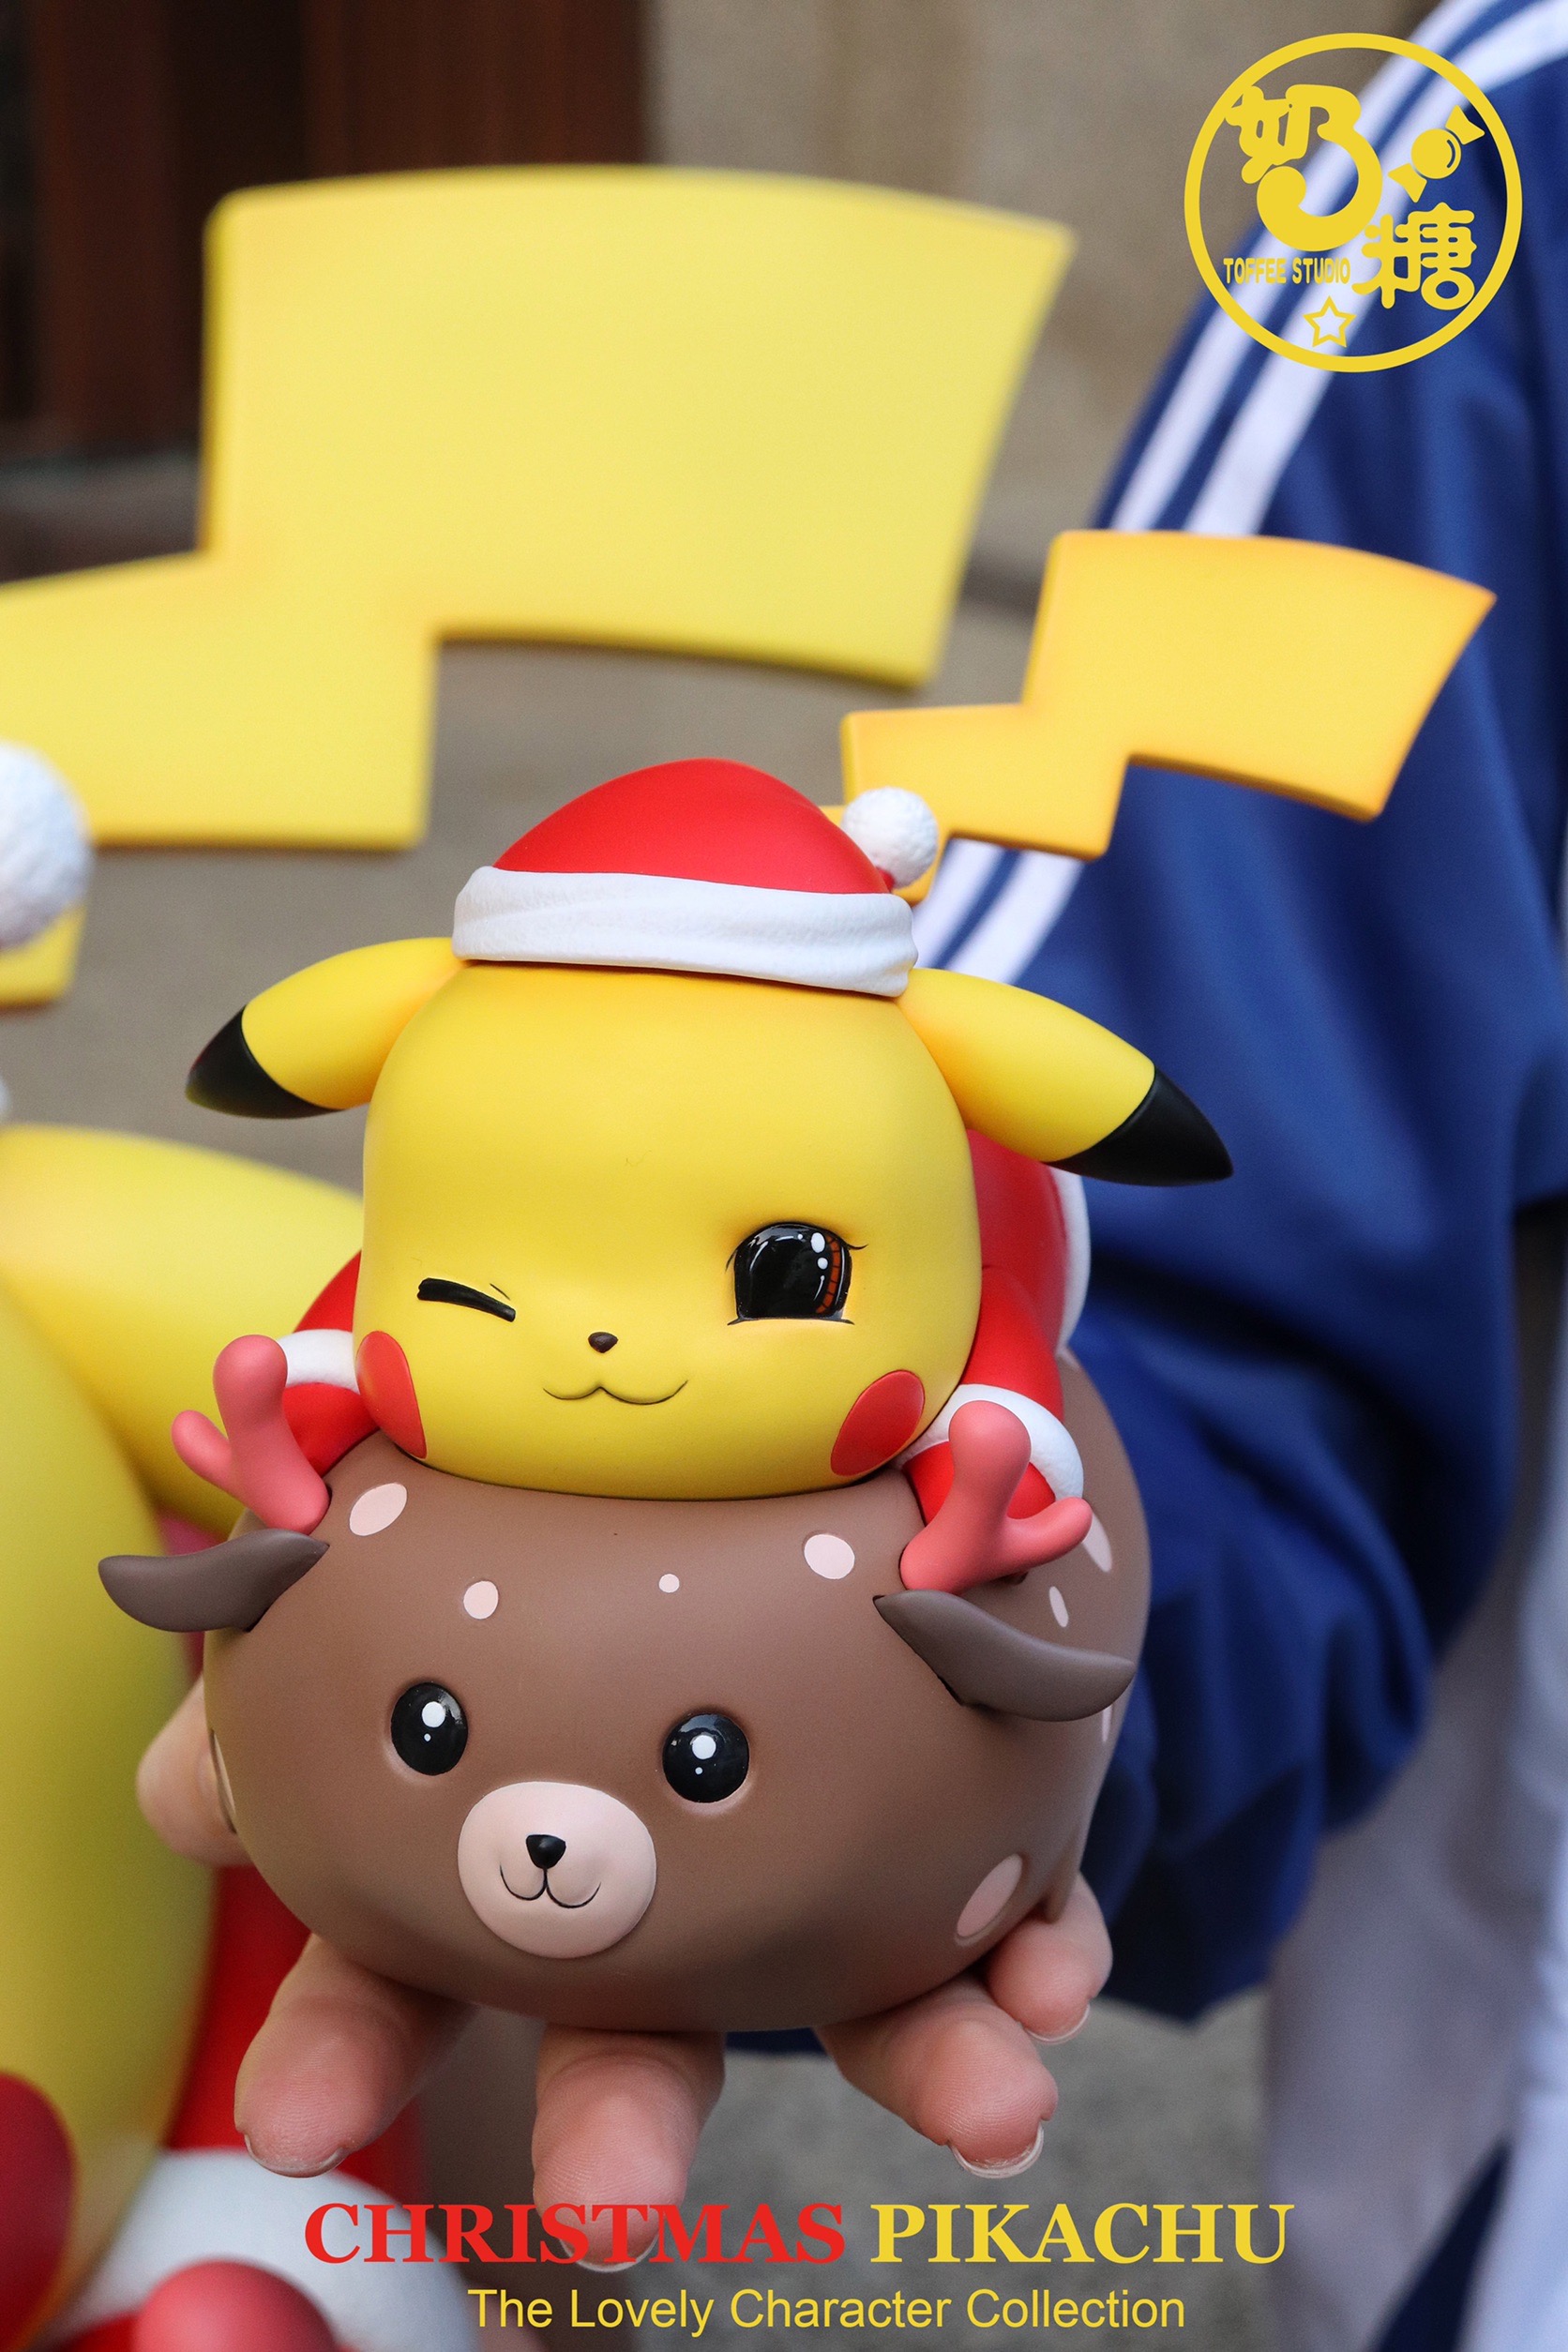 Mini Pikachu Christmas ปิกาจู แซนต้า by TOFFEE Studio (มัดจำ)